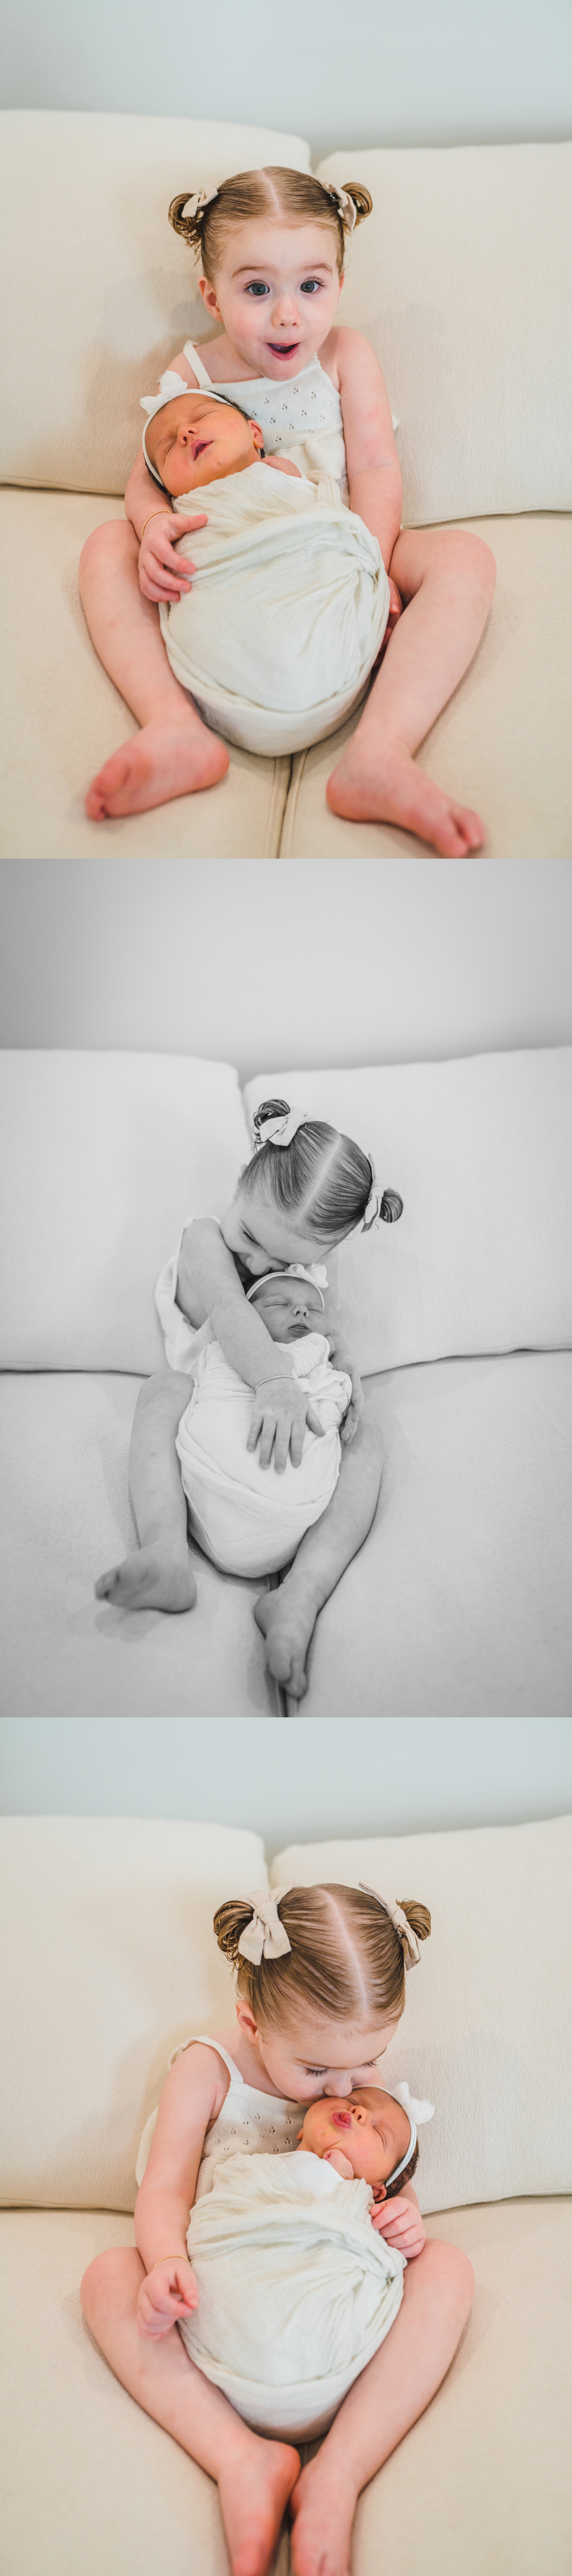 big sister holding baby sister | Melissa Sheridan Photography